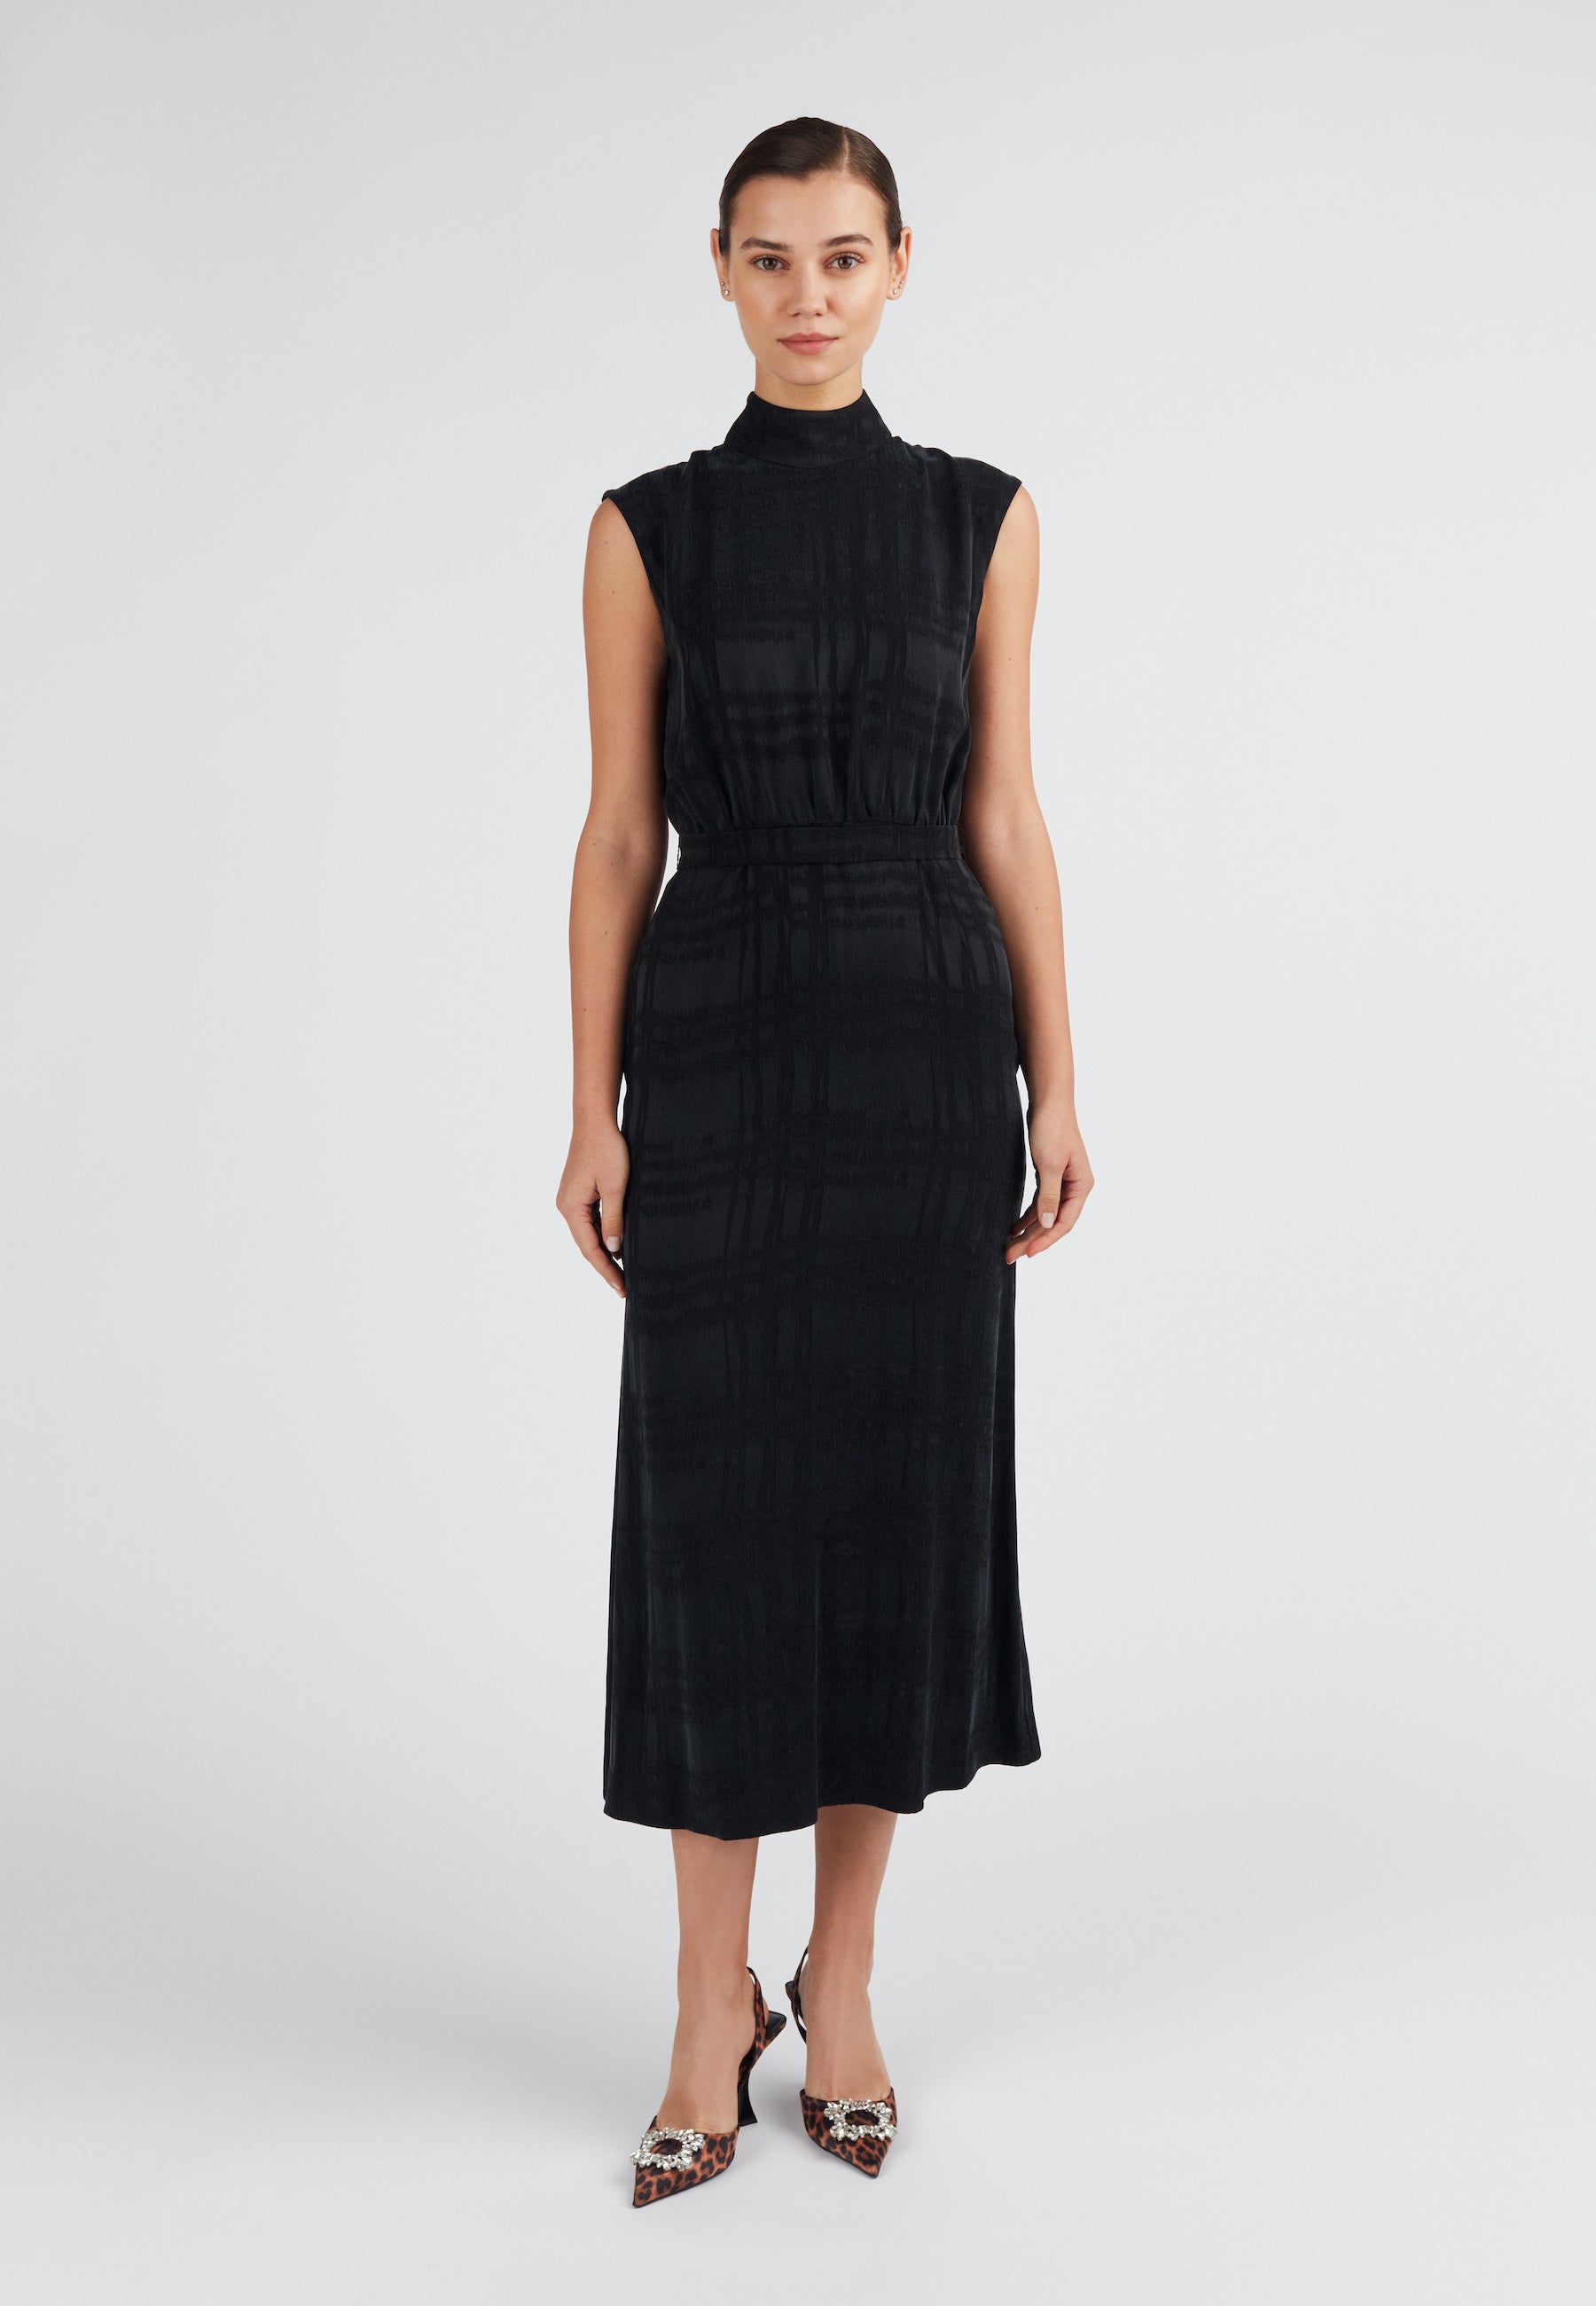 Black turtleneck medium length dress